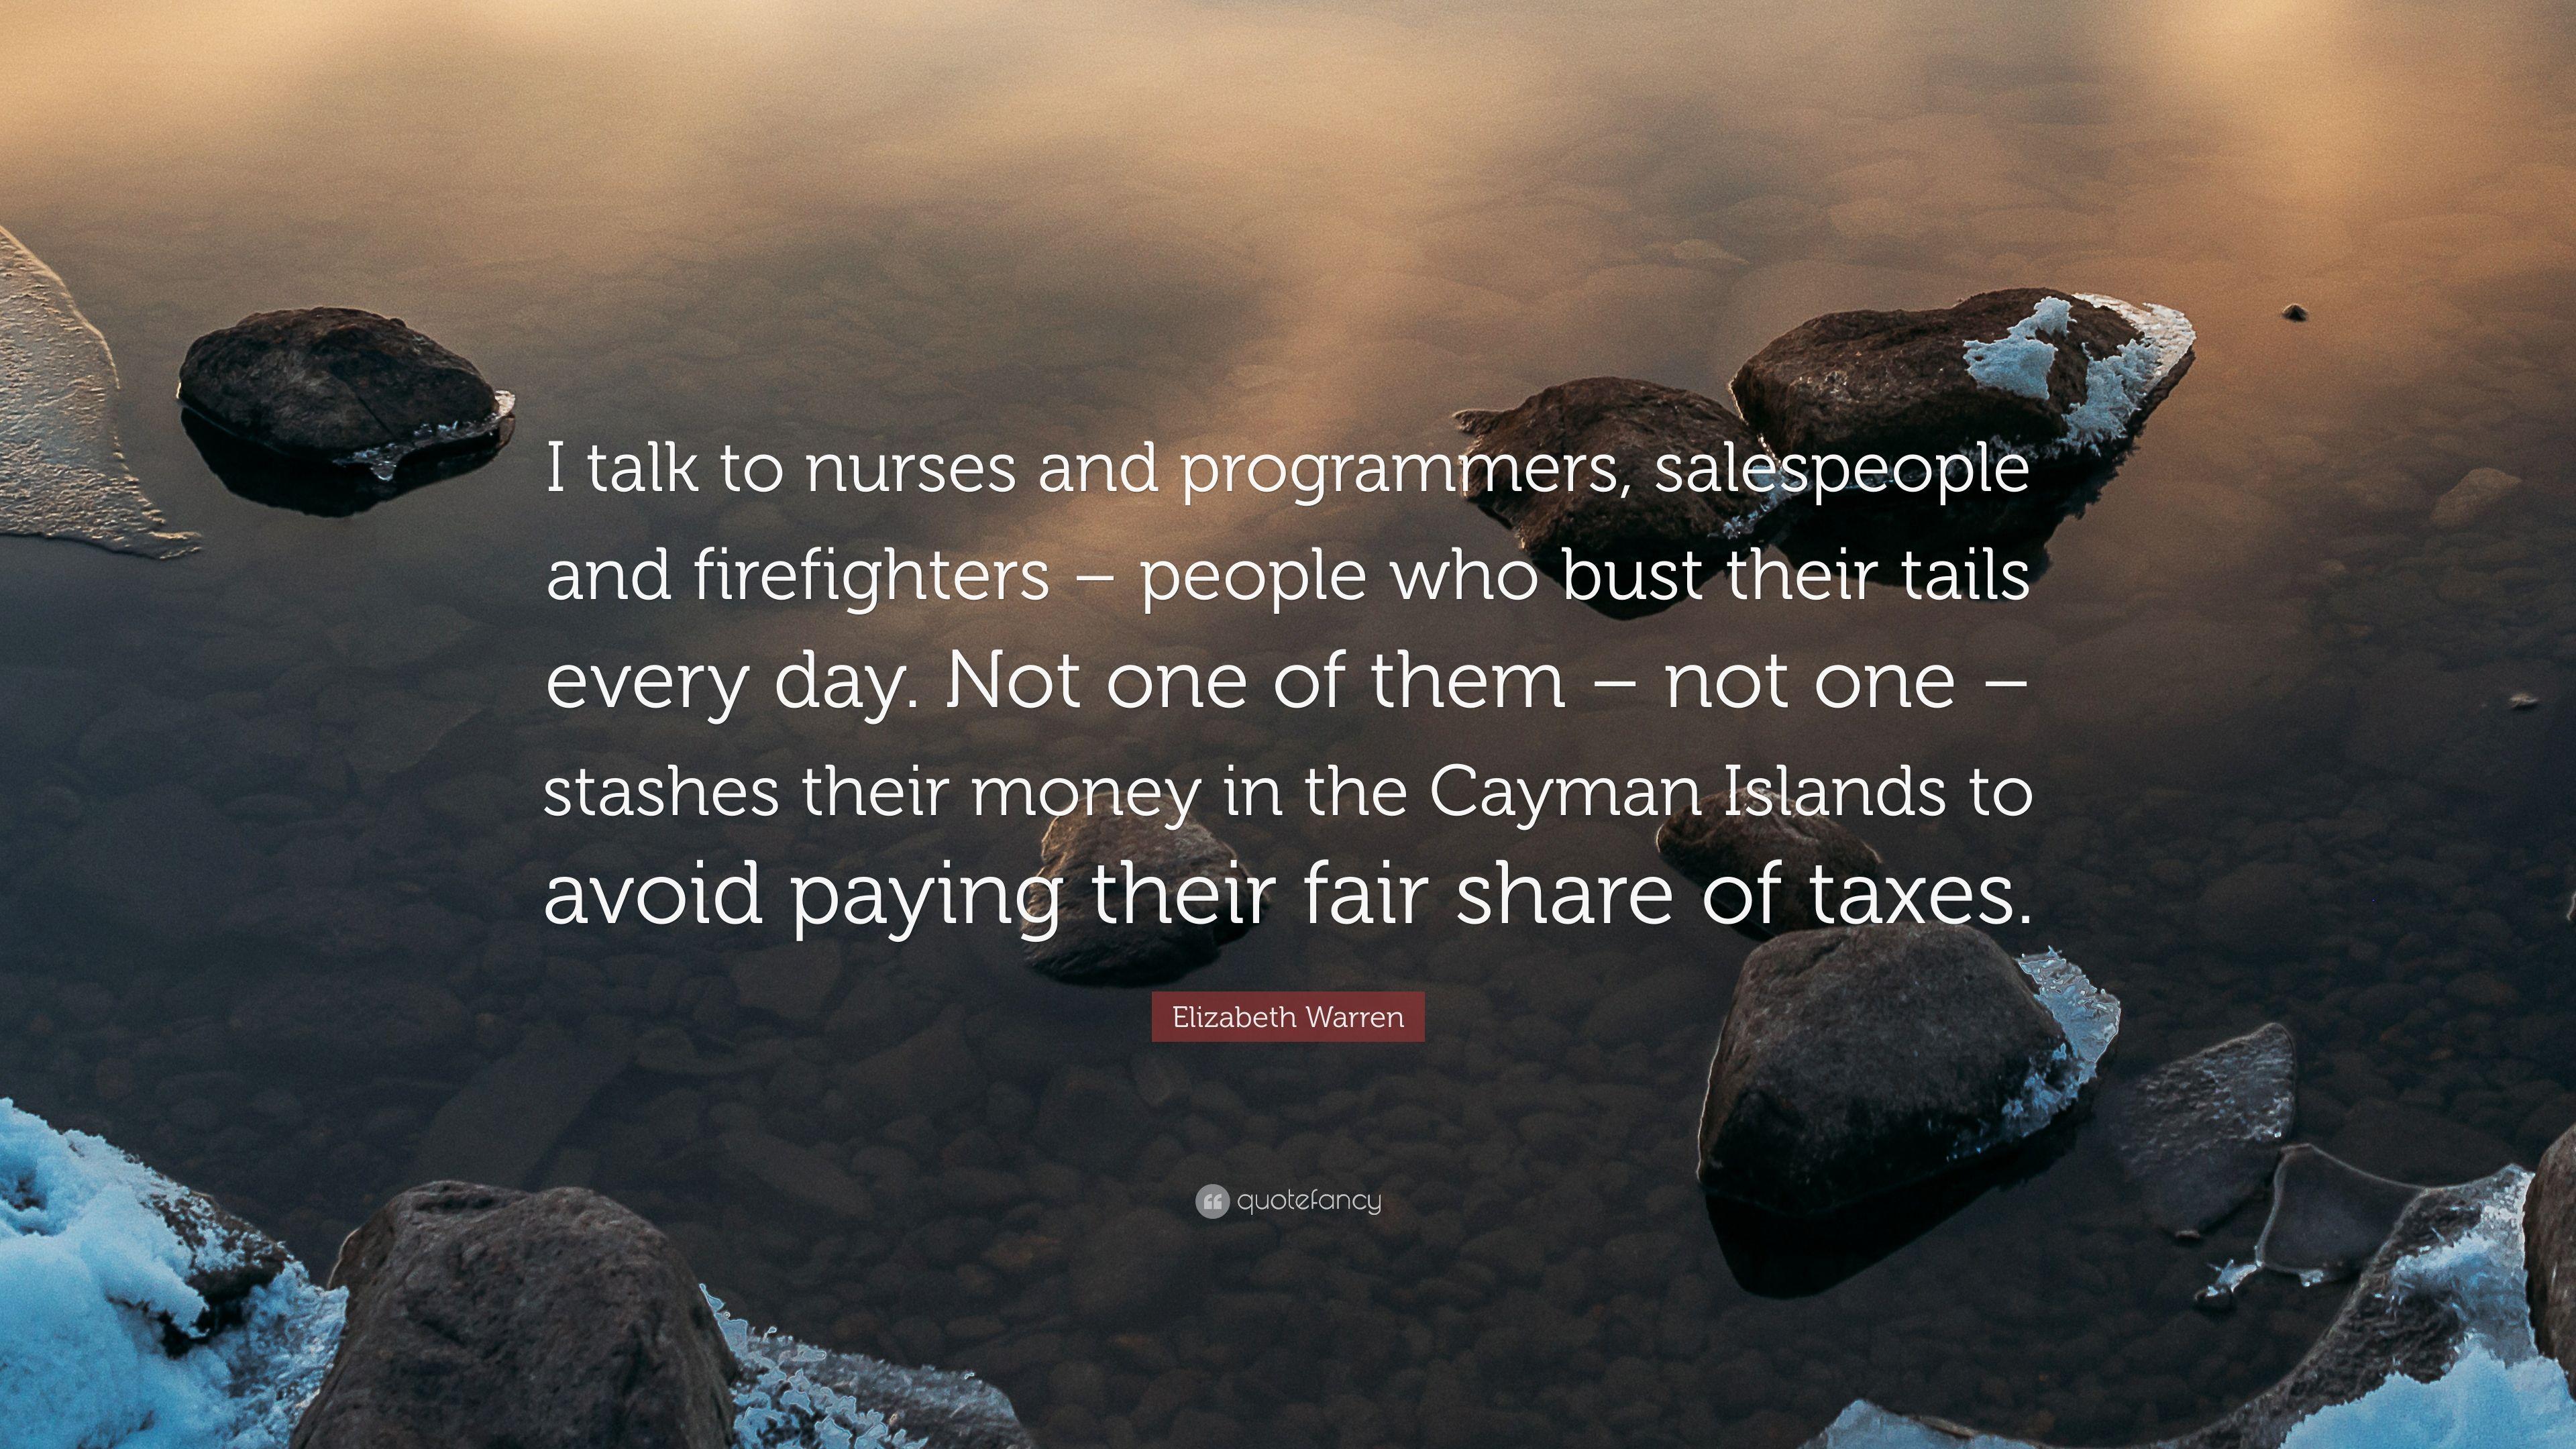 Elizabeth Warren Quote: “I talk to nurses and programmers